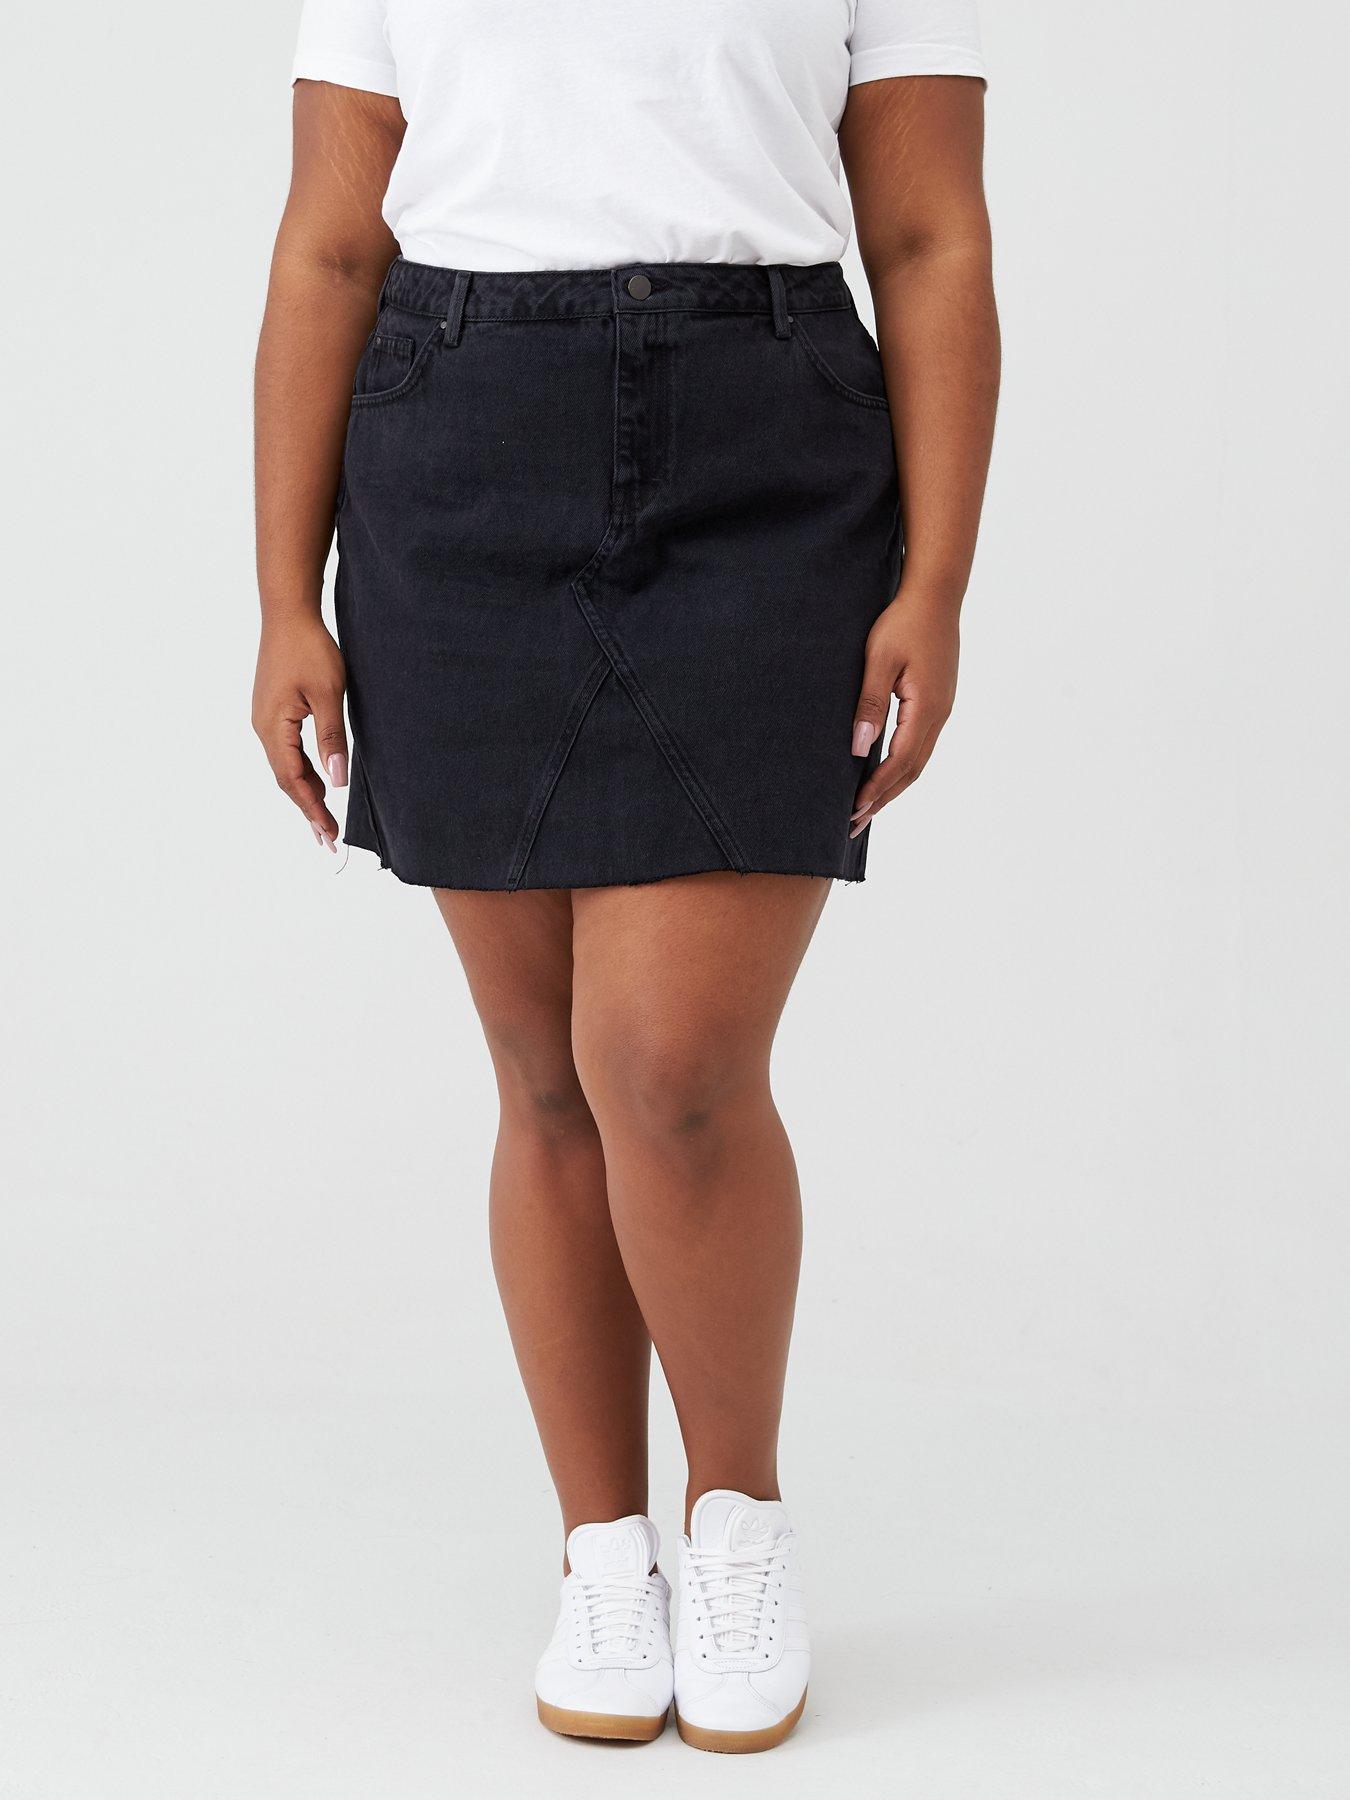 black jean skirt plus size